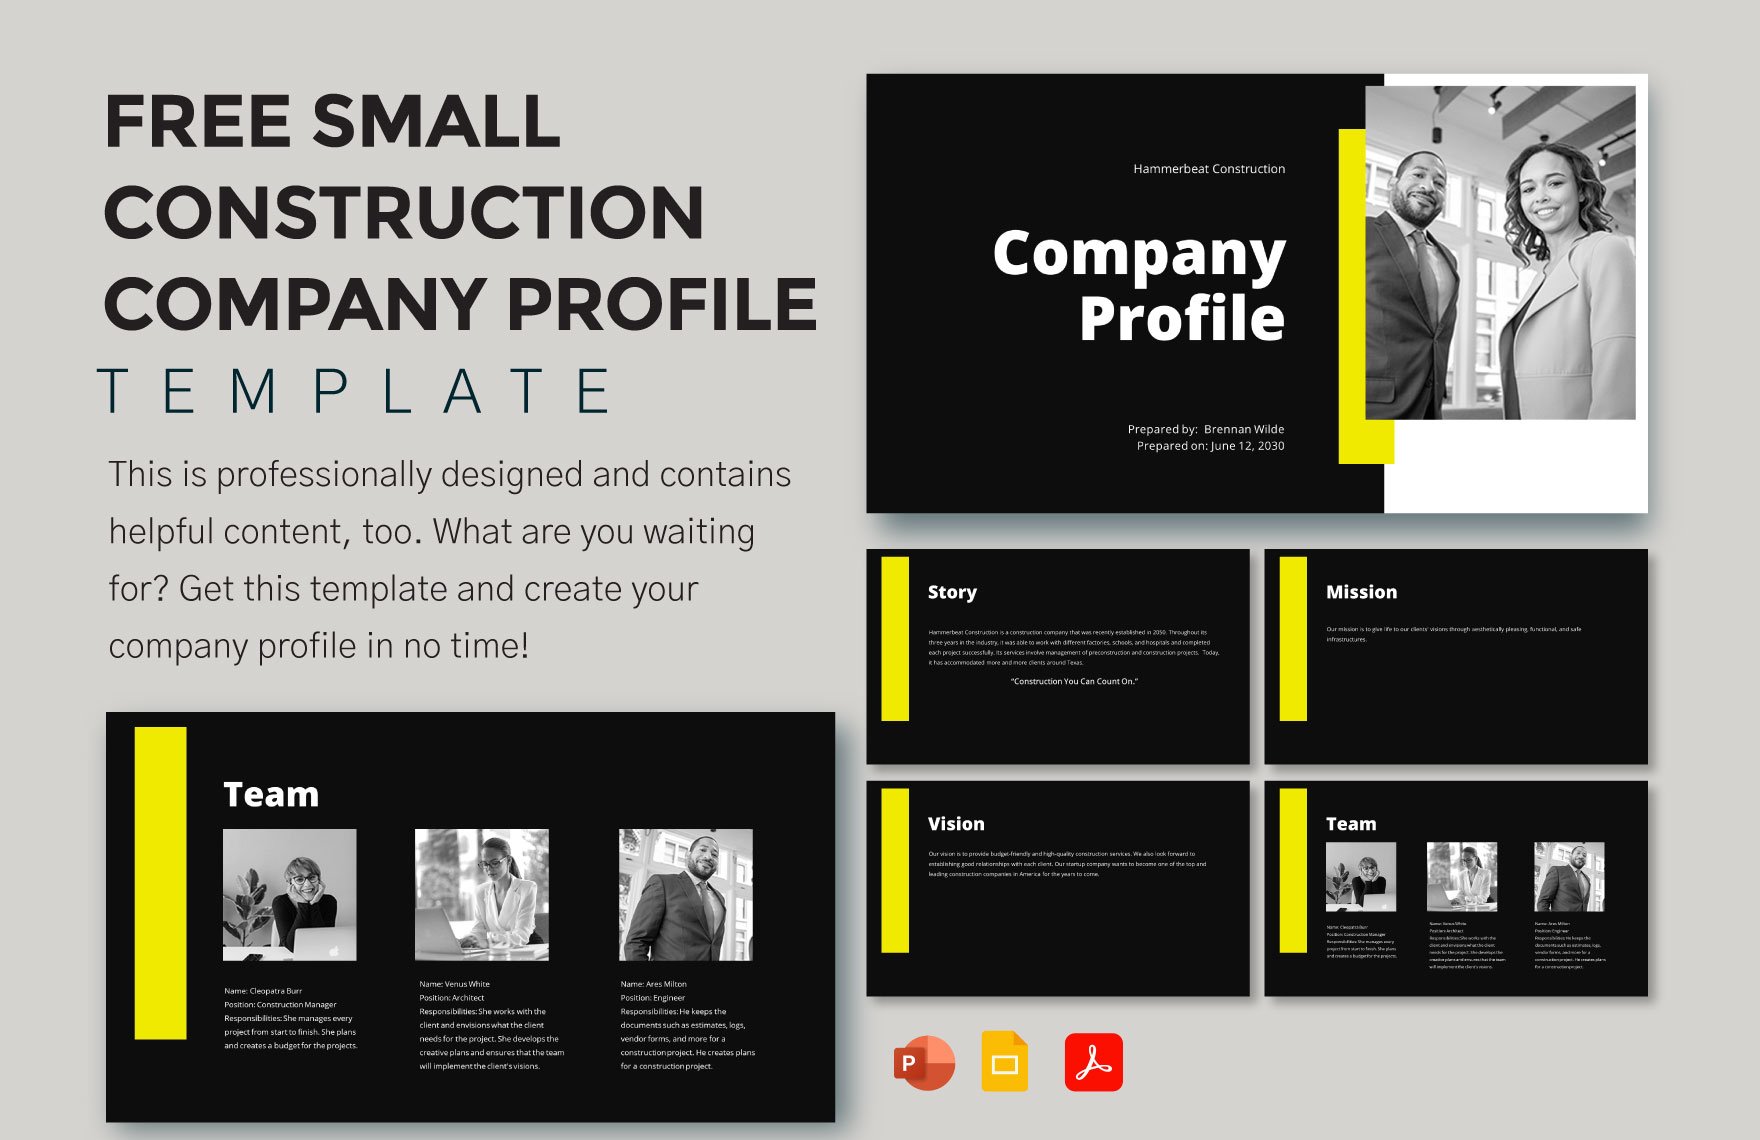 Free Small Construction Company Profile Template